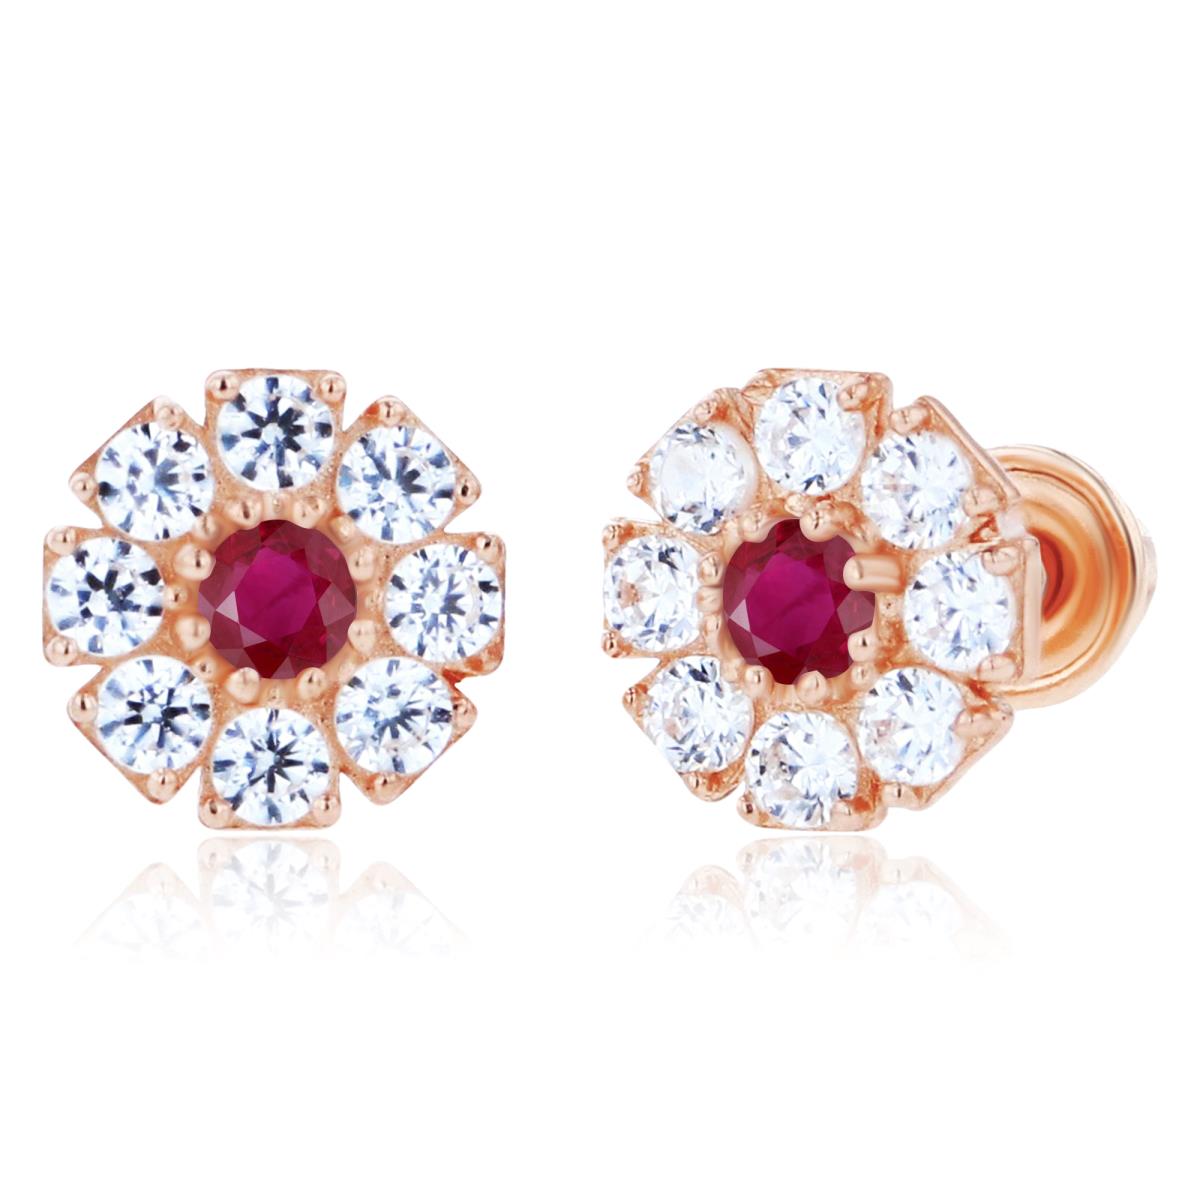 14K Rose Gold 2mm Round Ruby & 1.5mm Created White Sapphire Flower Screwback Earrings